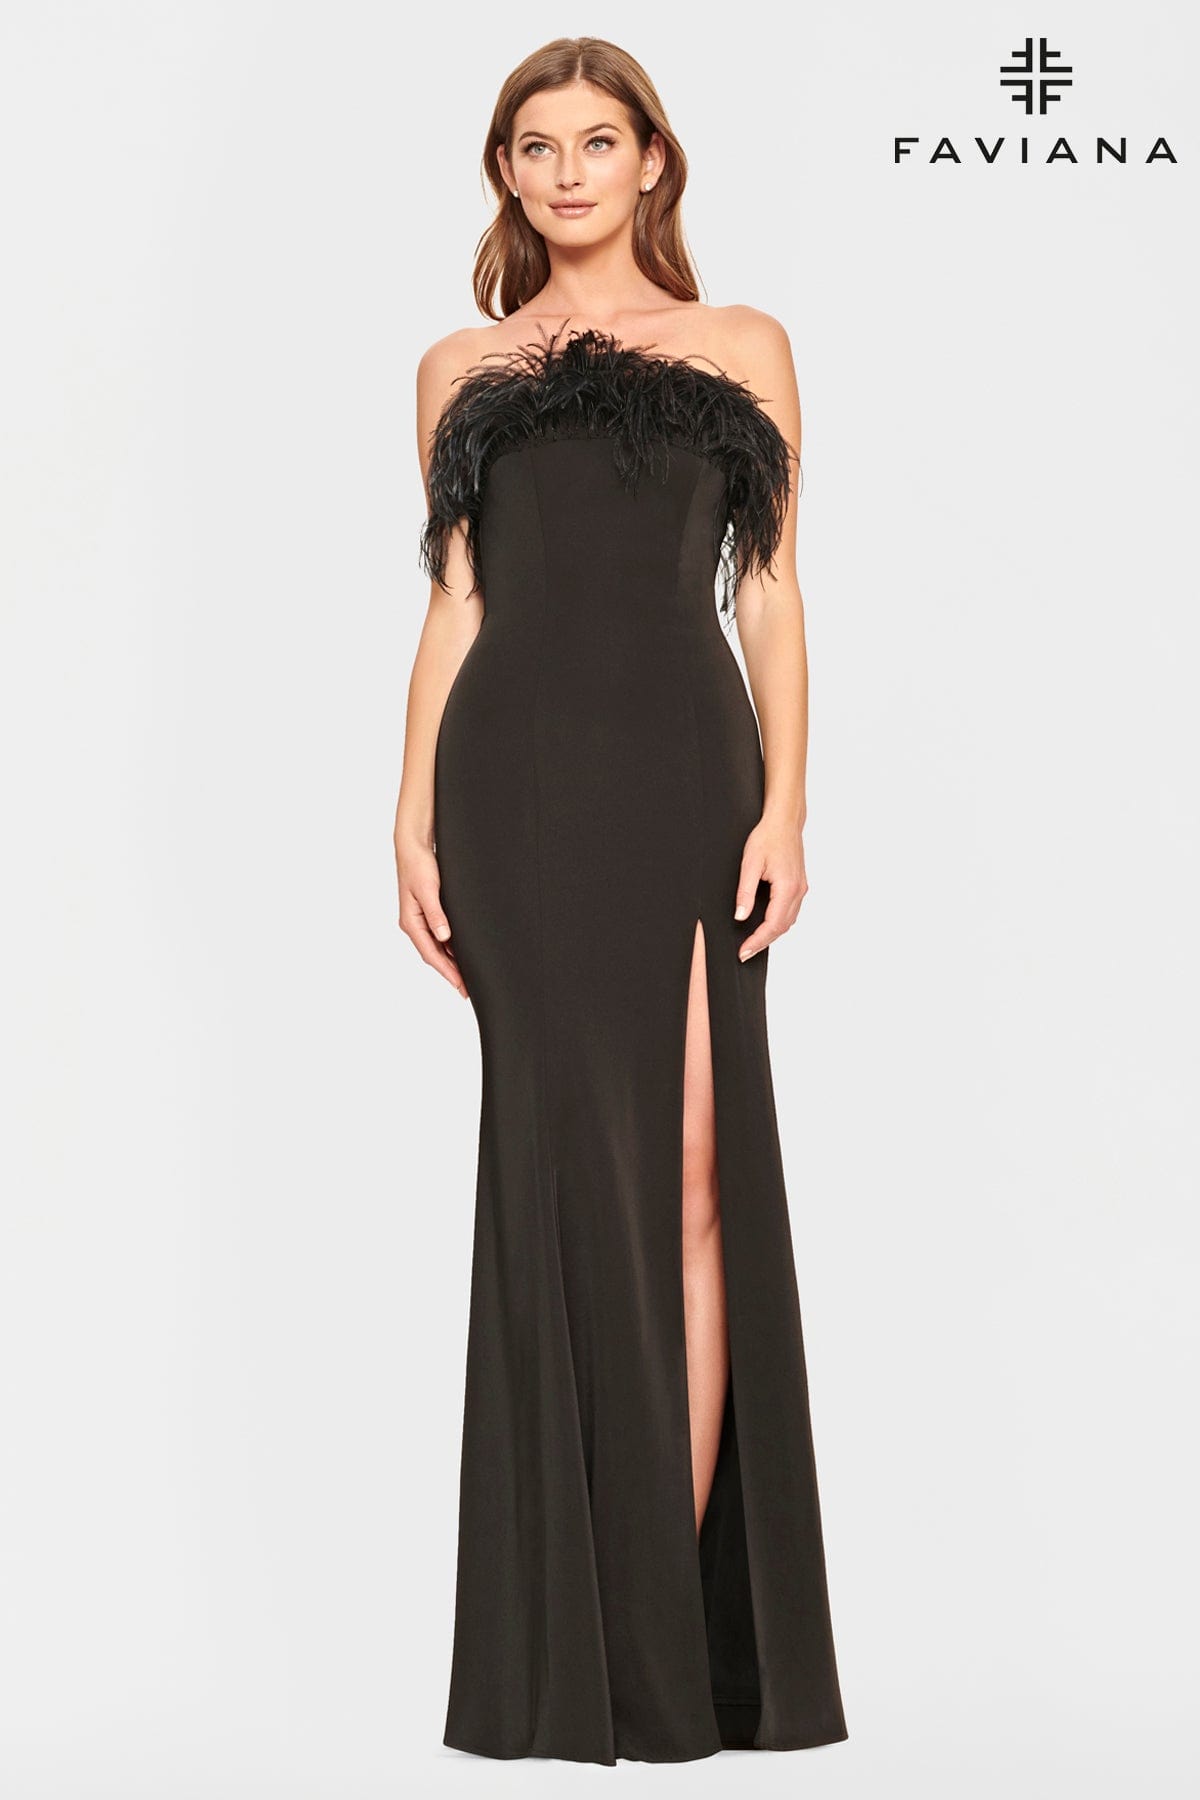 Feather Trim Black Dress With Leg Slit